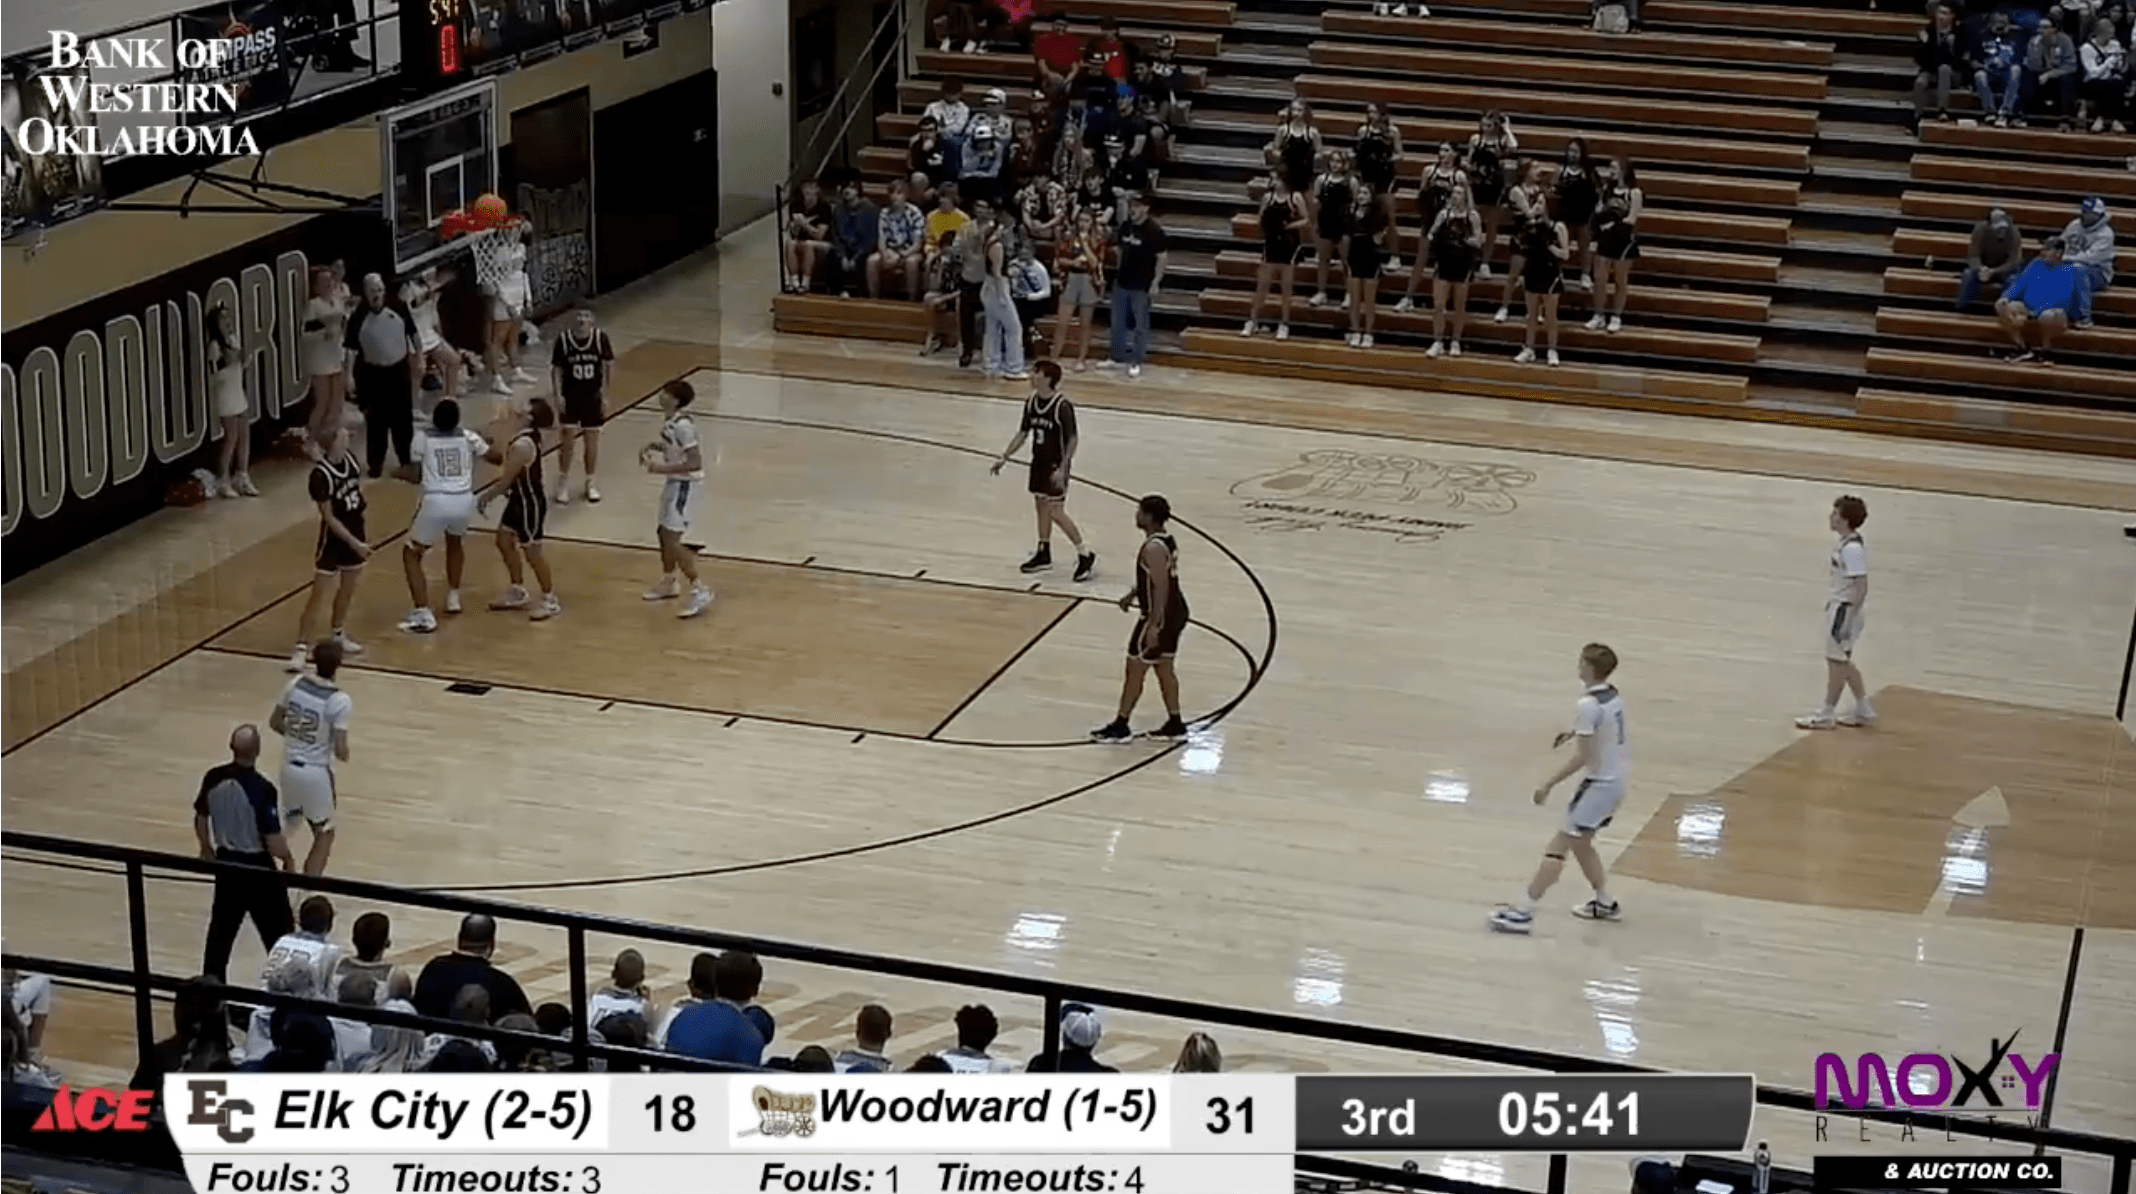 Elk City vs. Woodward Boys Basketball Game - Intense Court Action